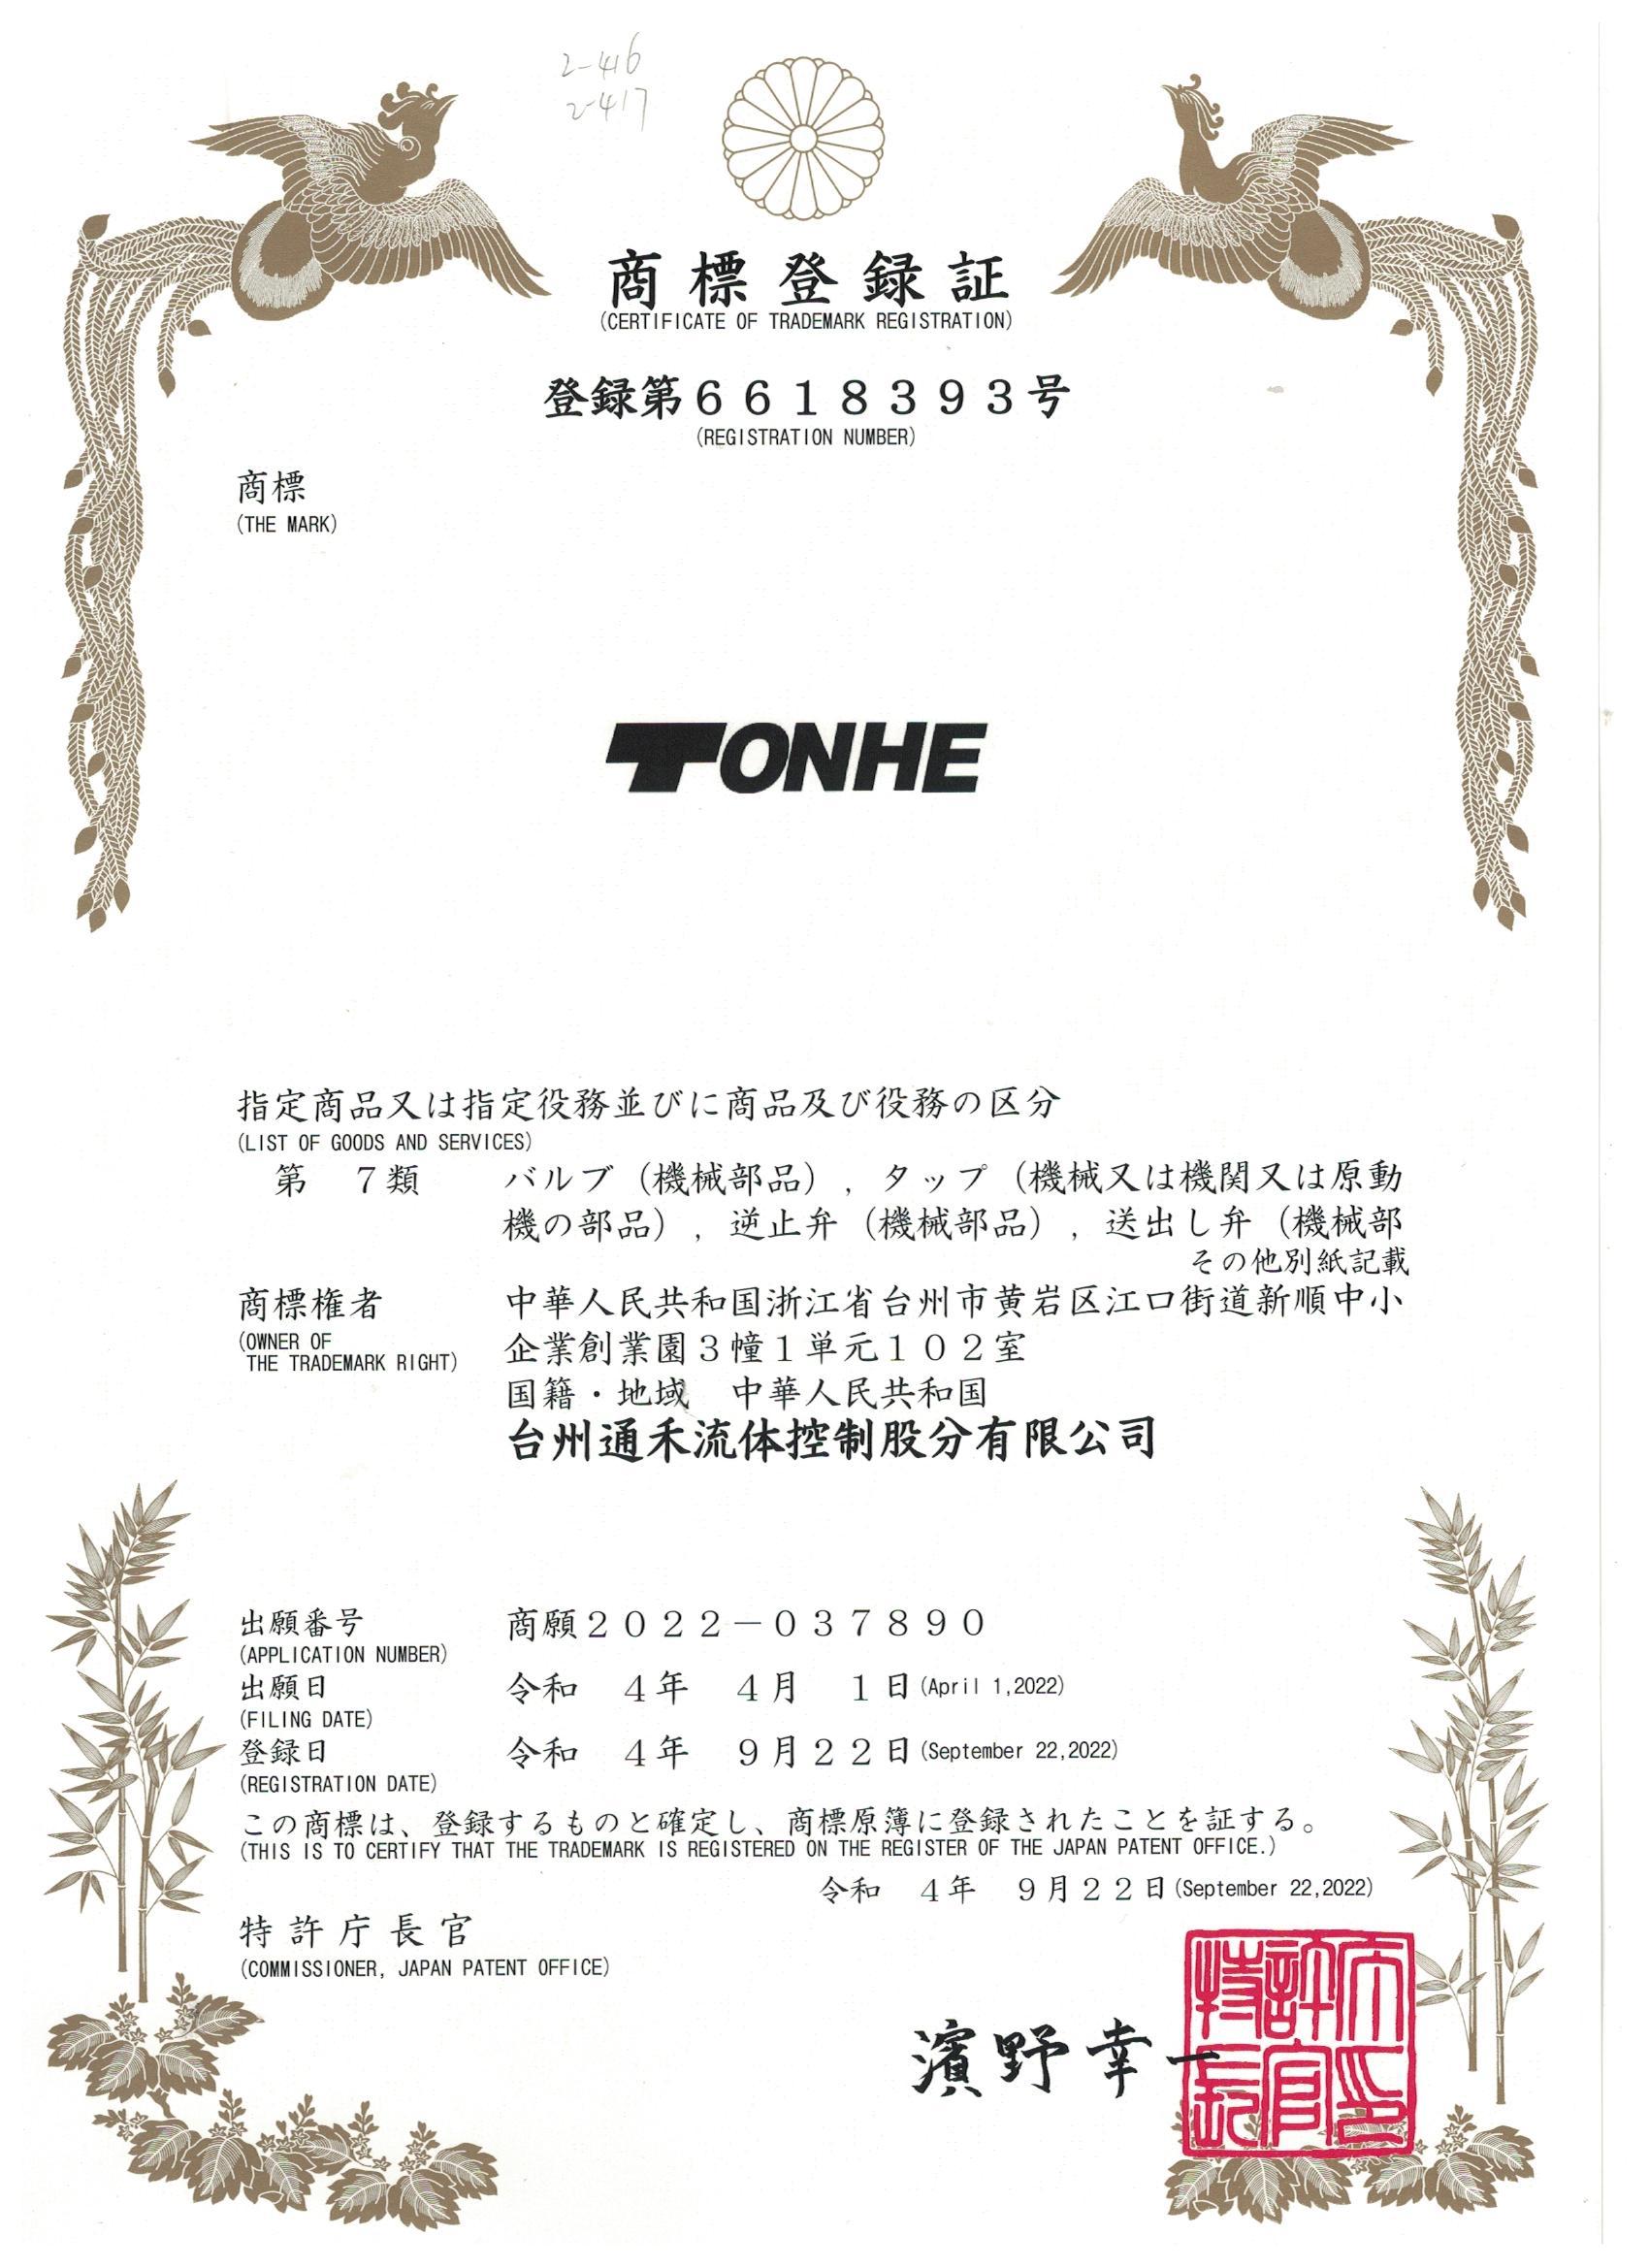 TONHE-Japanese Trademark 